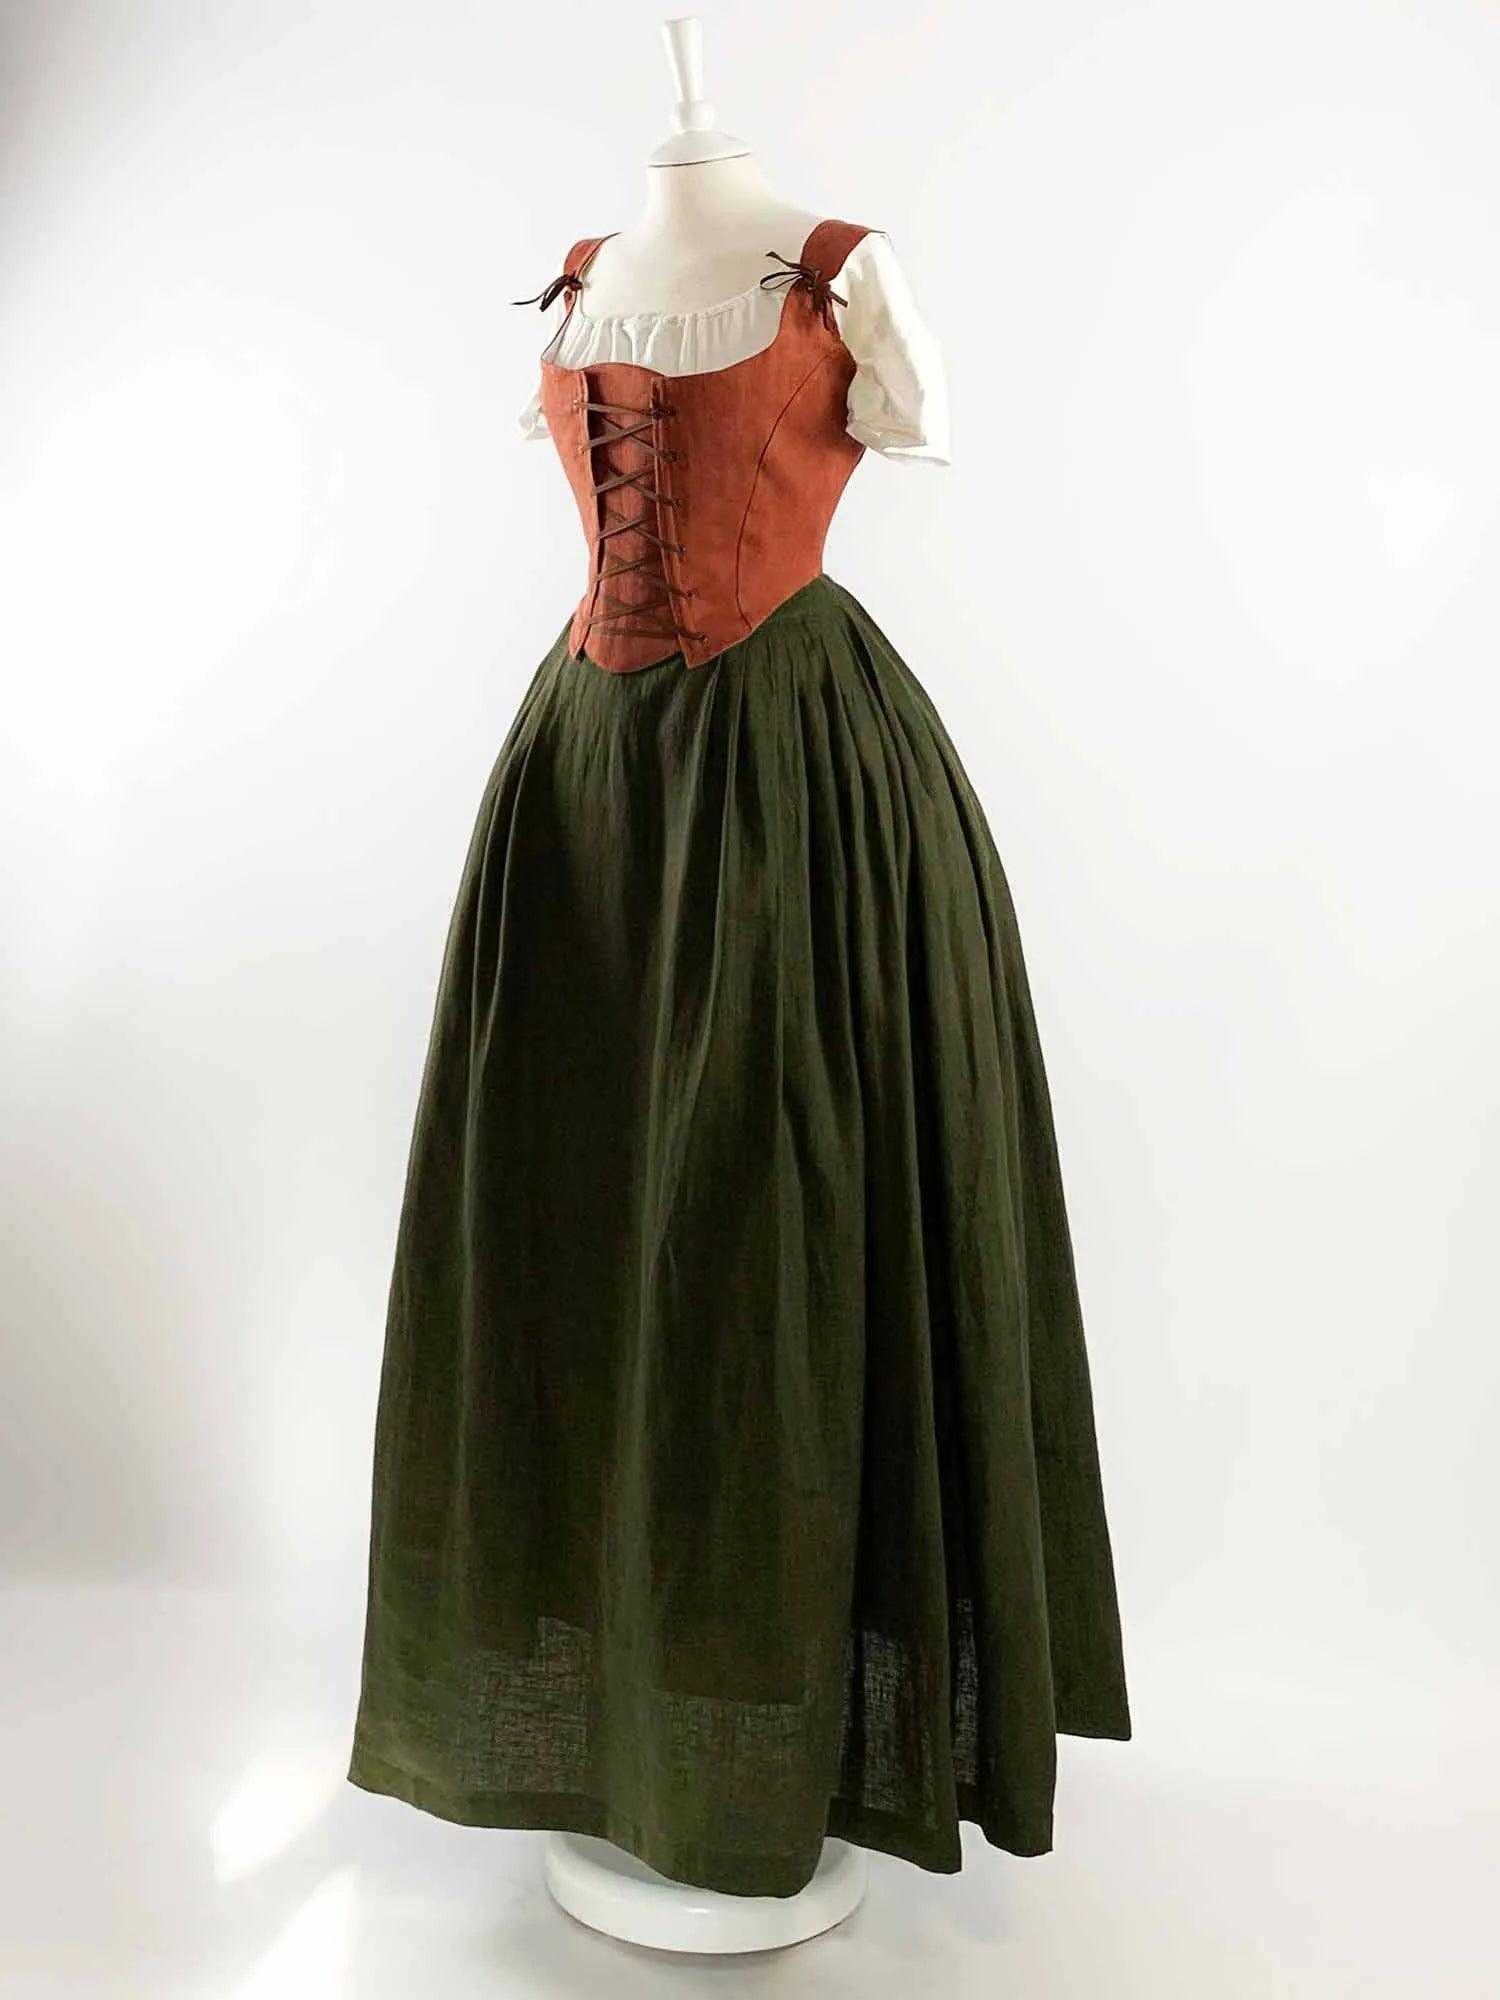 Irish Dress - SS-IRISH - Medieval Collectibles